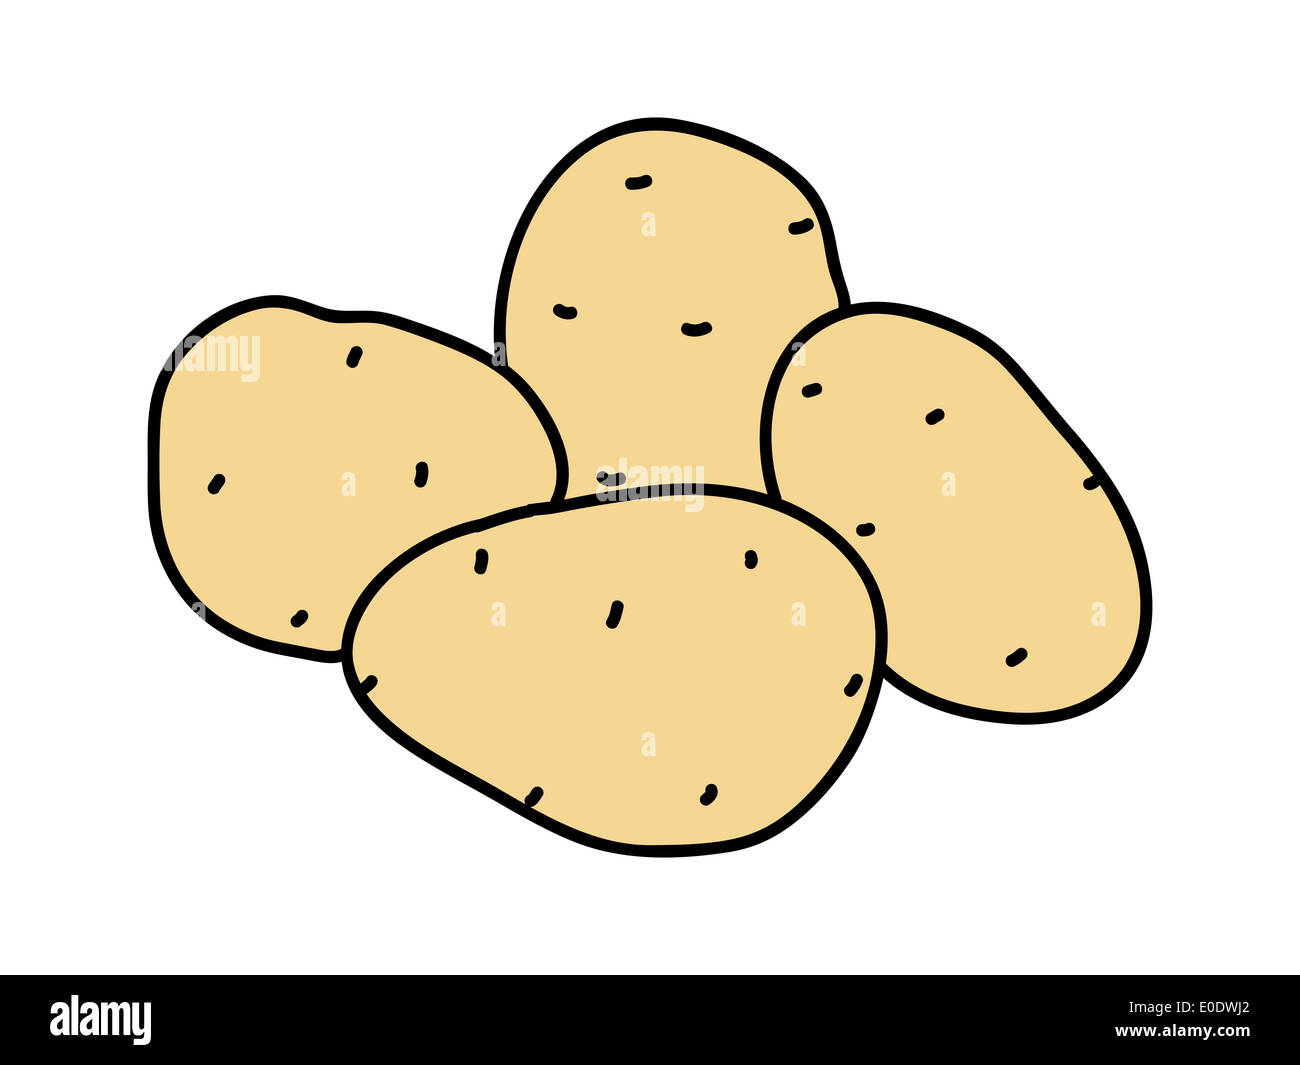 Potatoes illustration Stock Photo